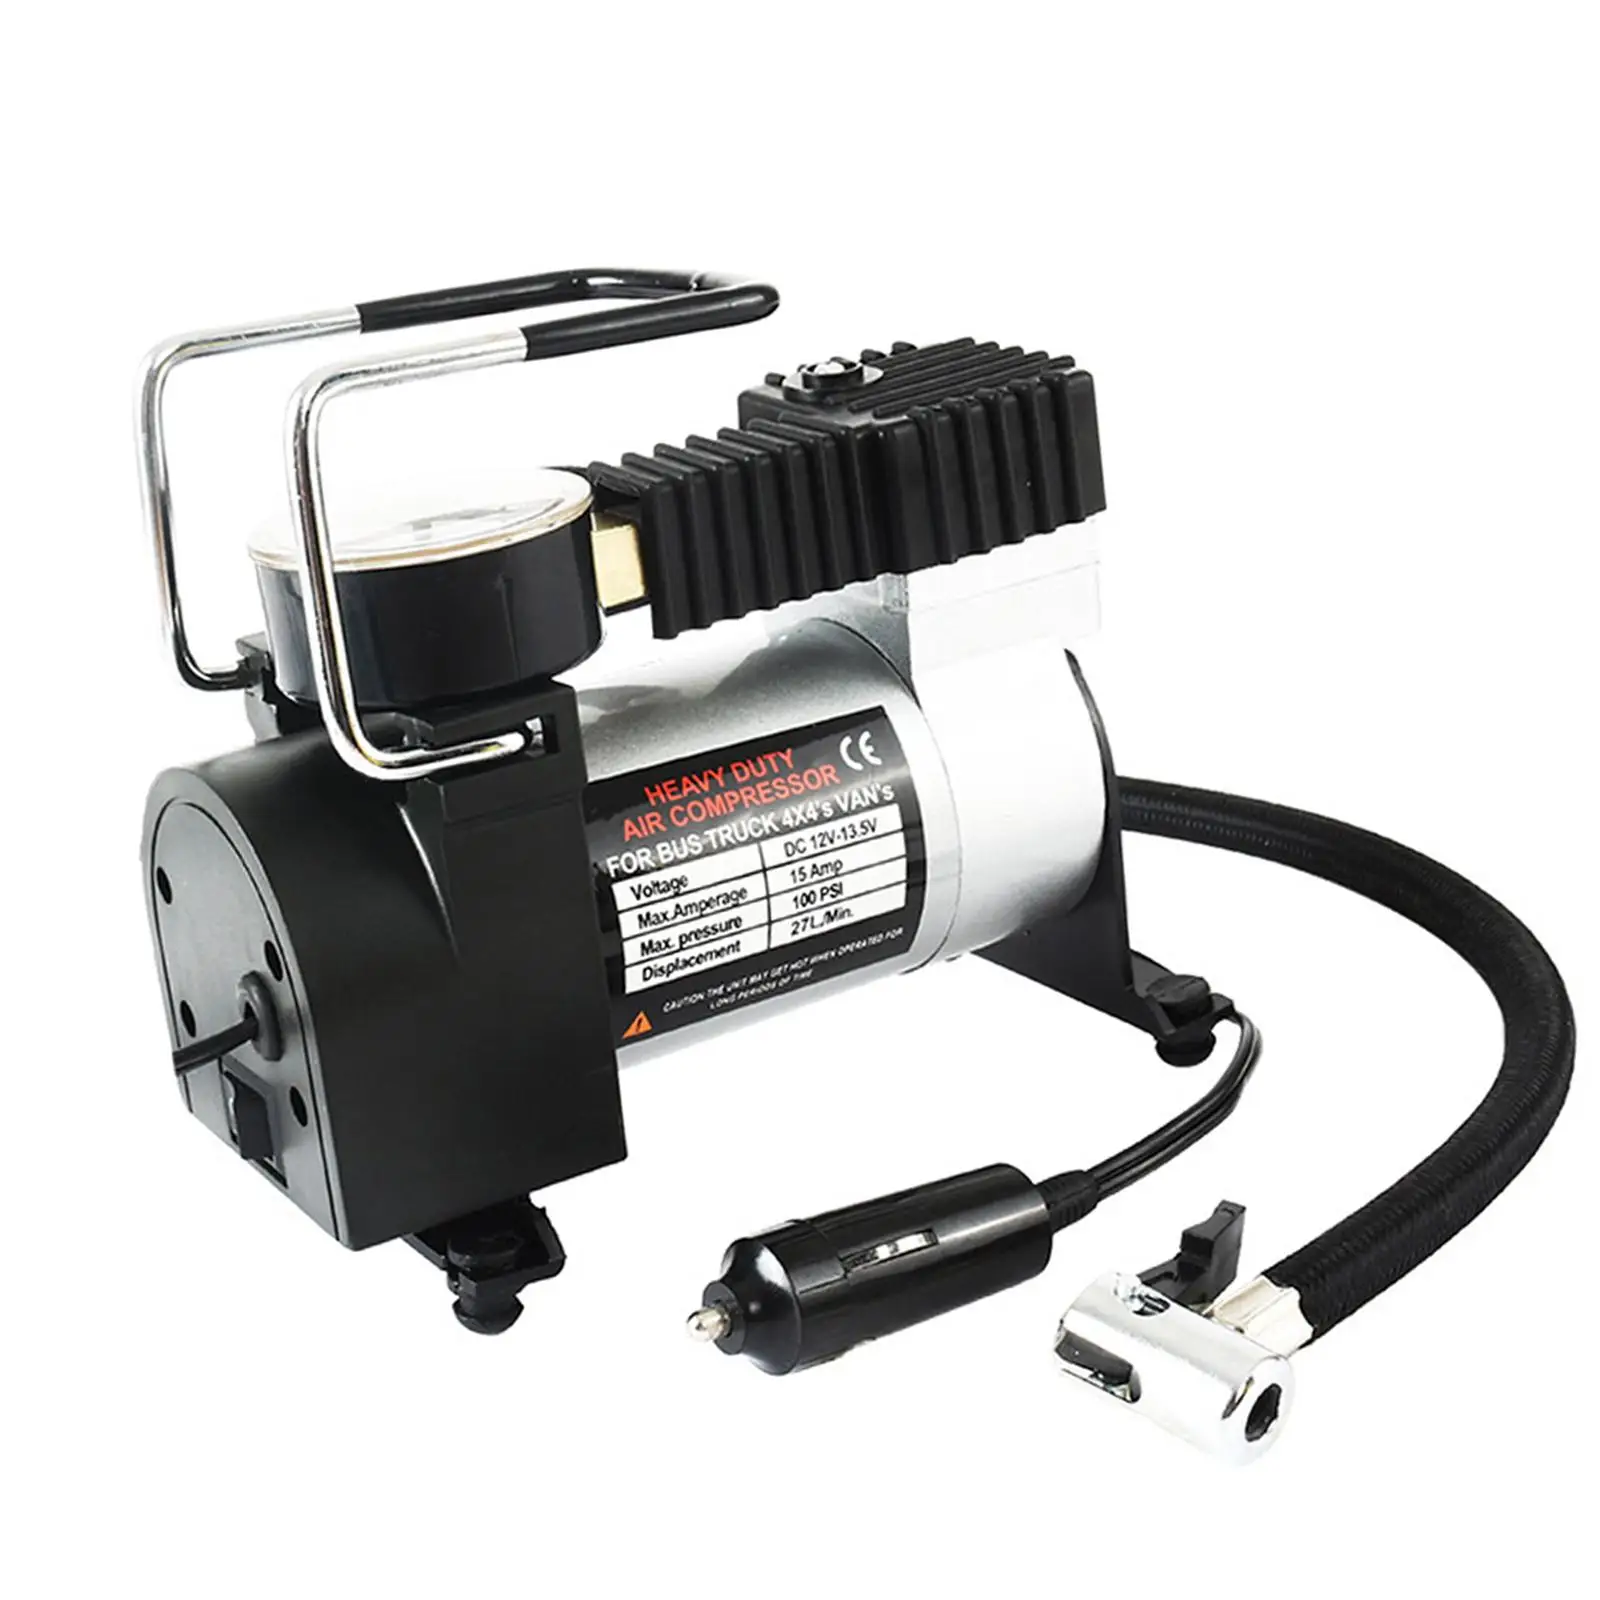 Tire Inflator Handheld Charging Pump Compact High Pressure Electric Pump Electric Air Compressor for Trucks Van Cars SUV